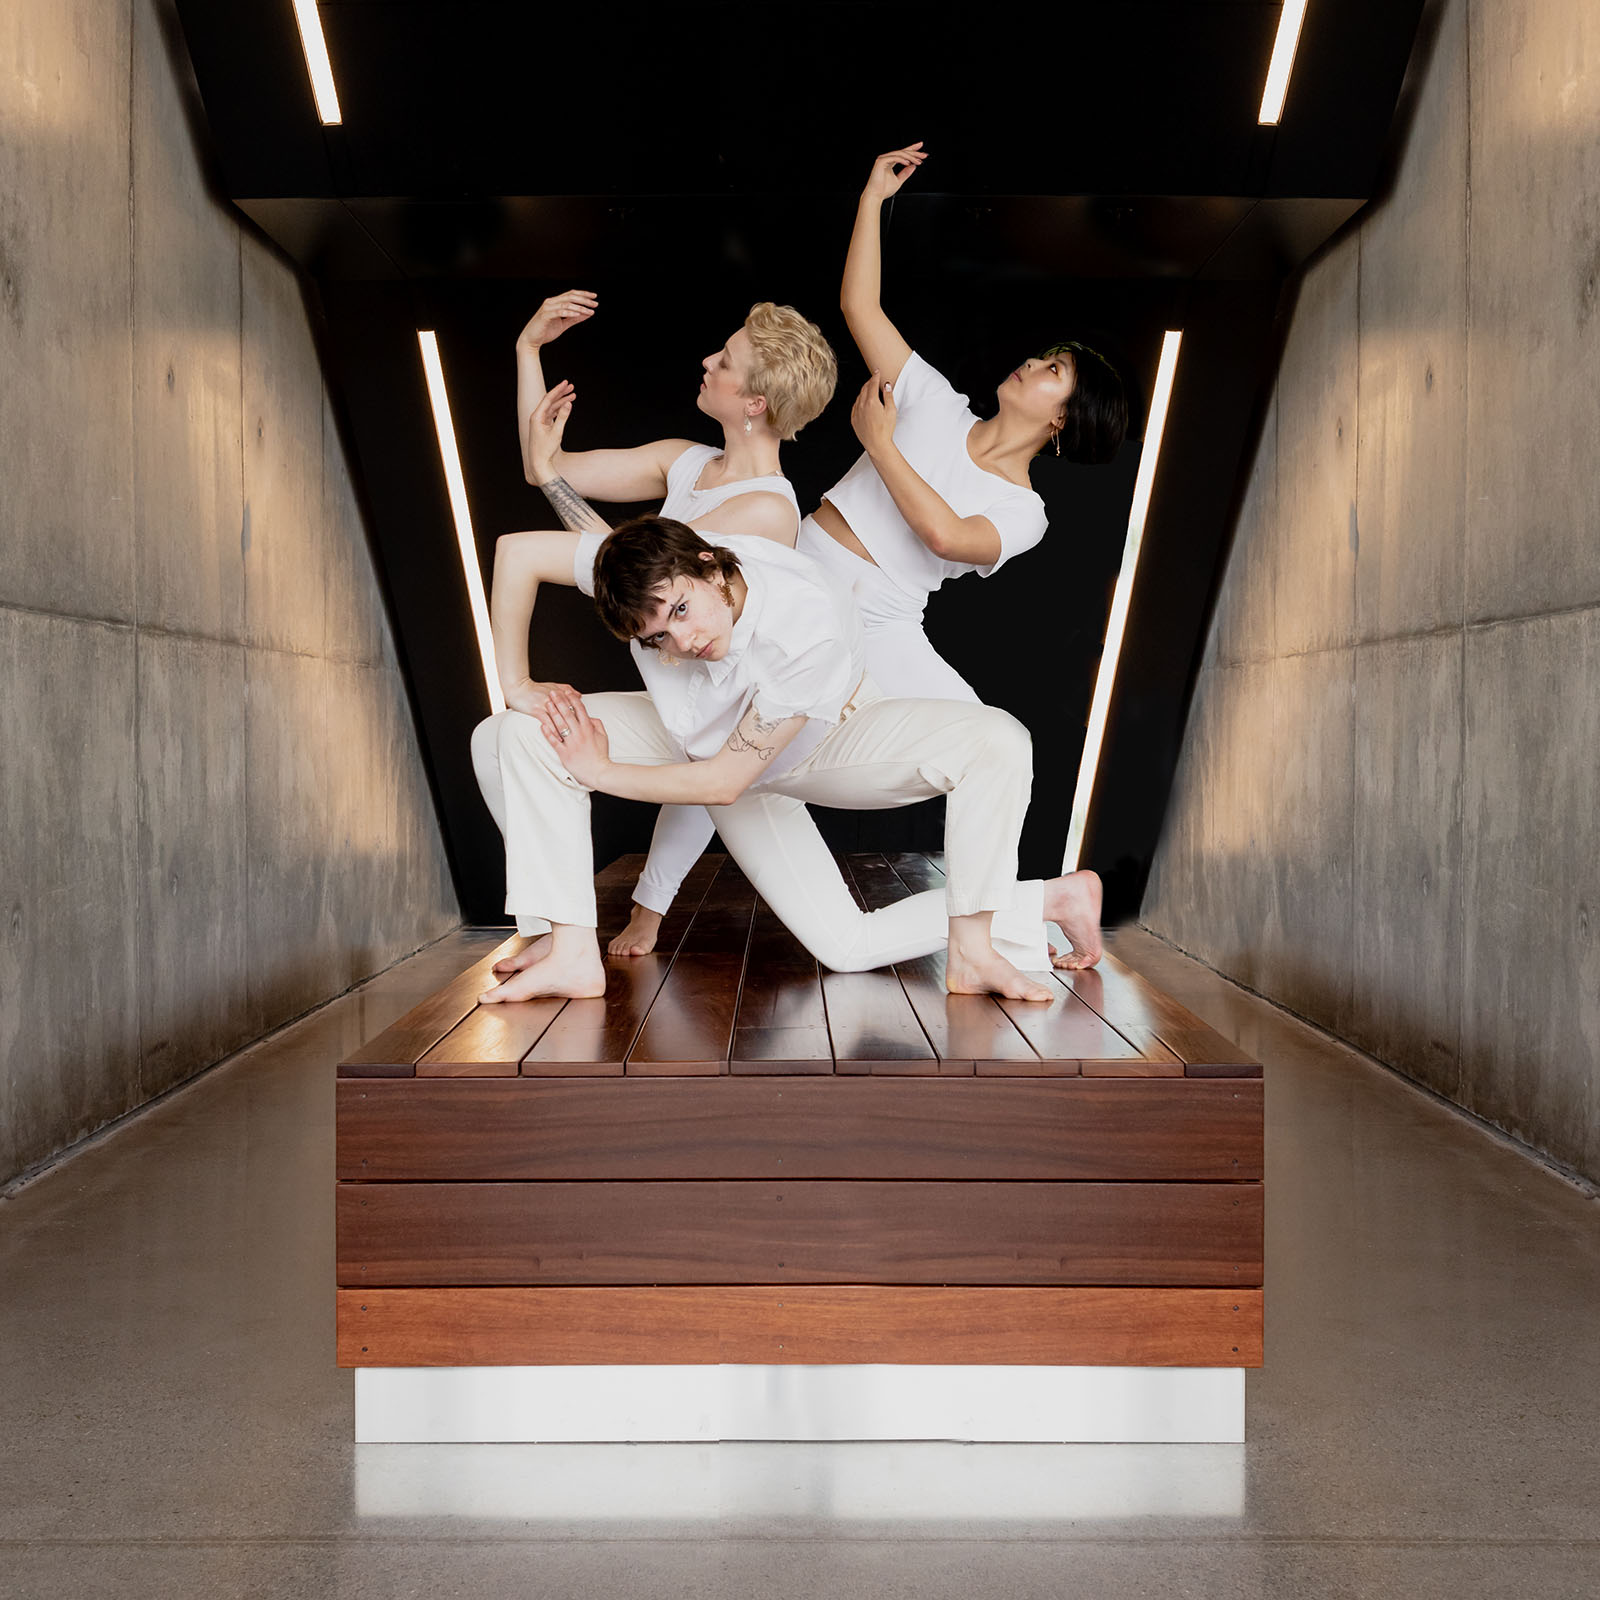 Three dancers in an angular, sculptural pose